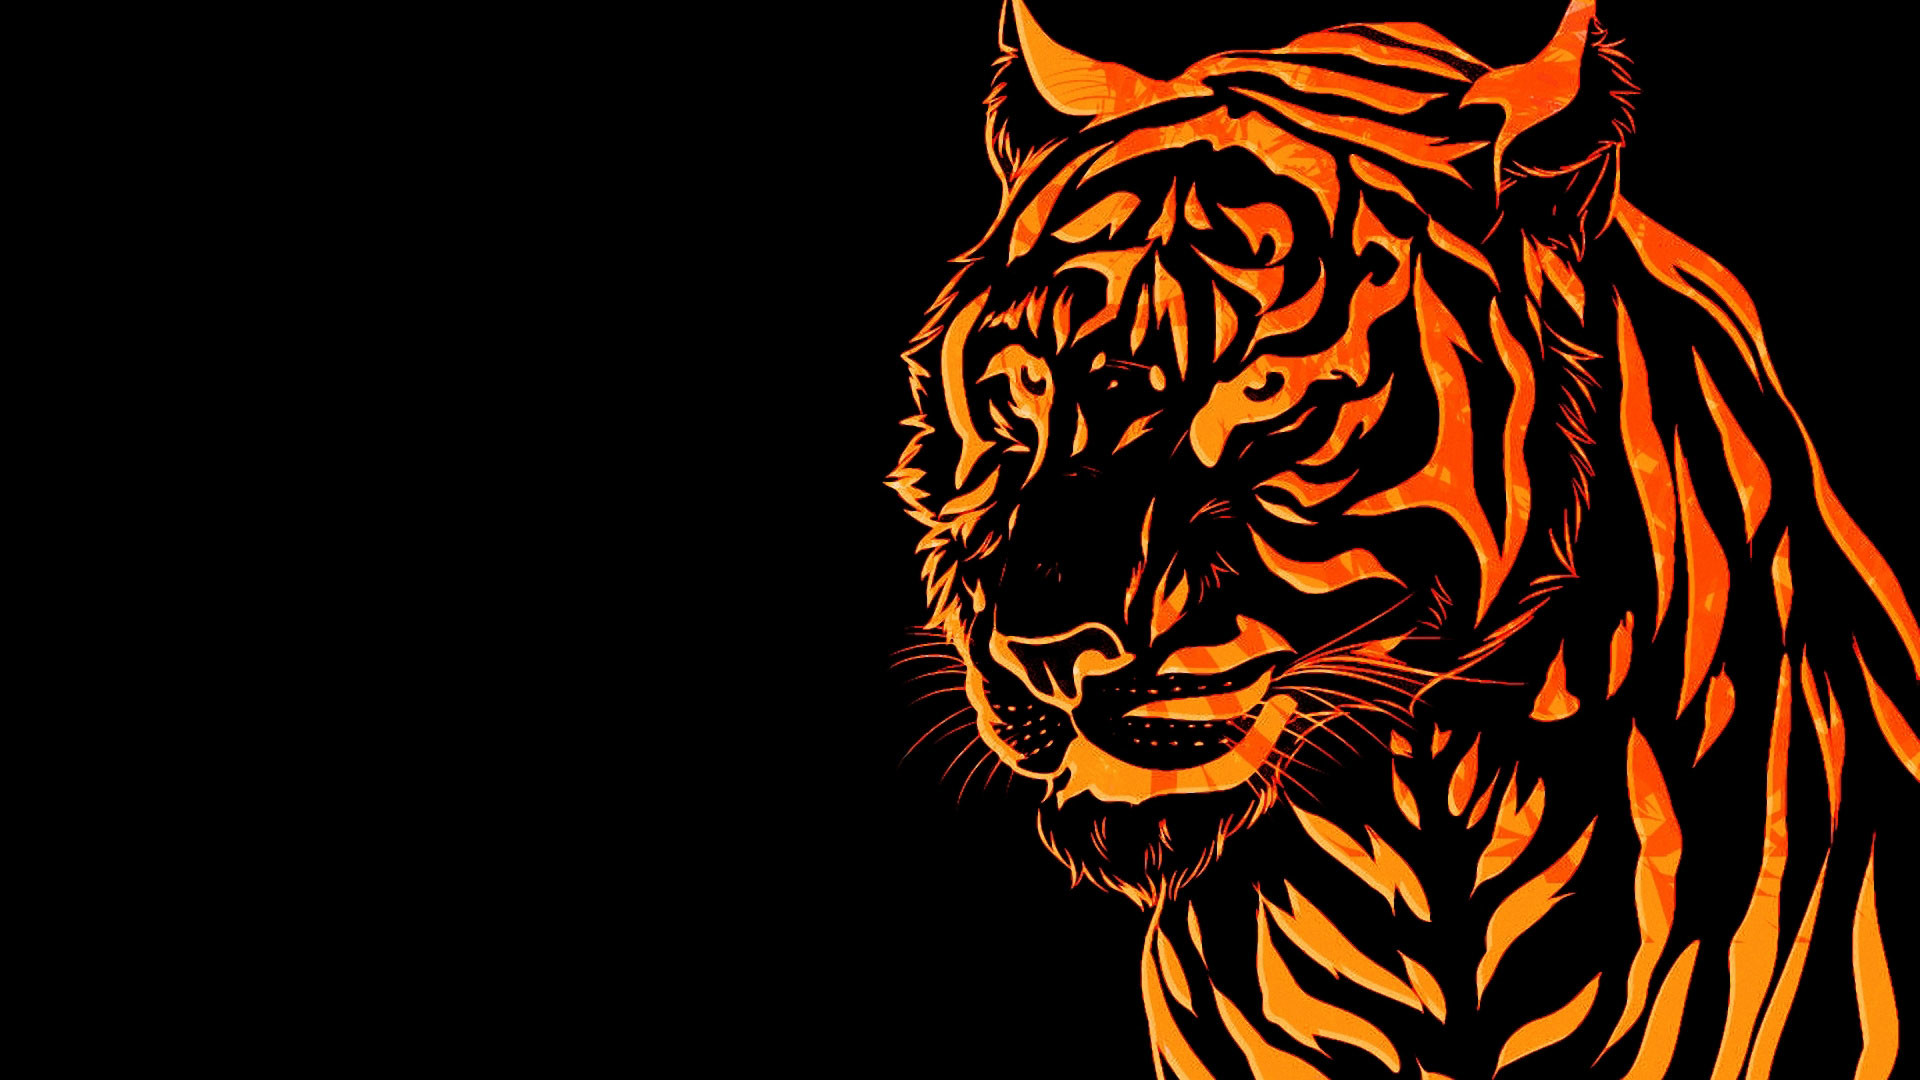 Neon Tiger Wallpaper Image